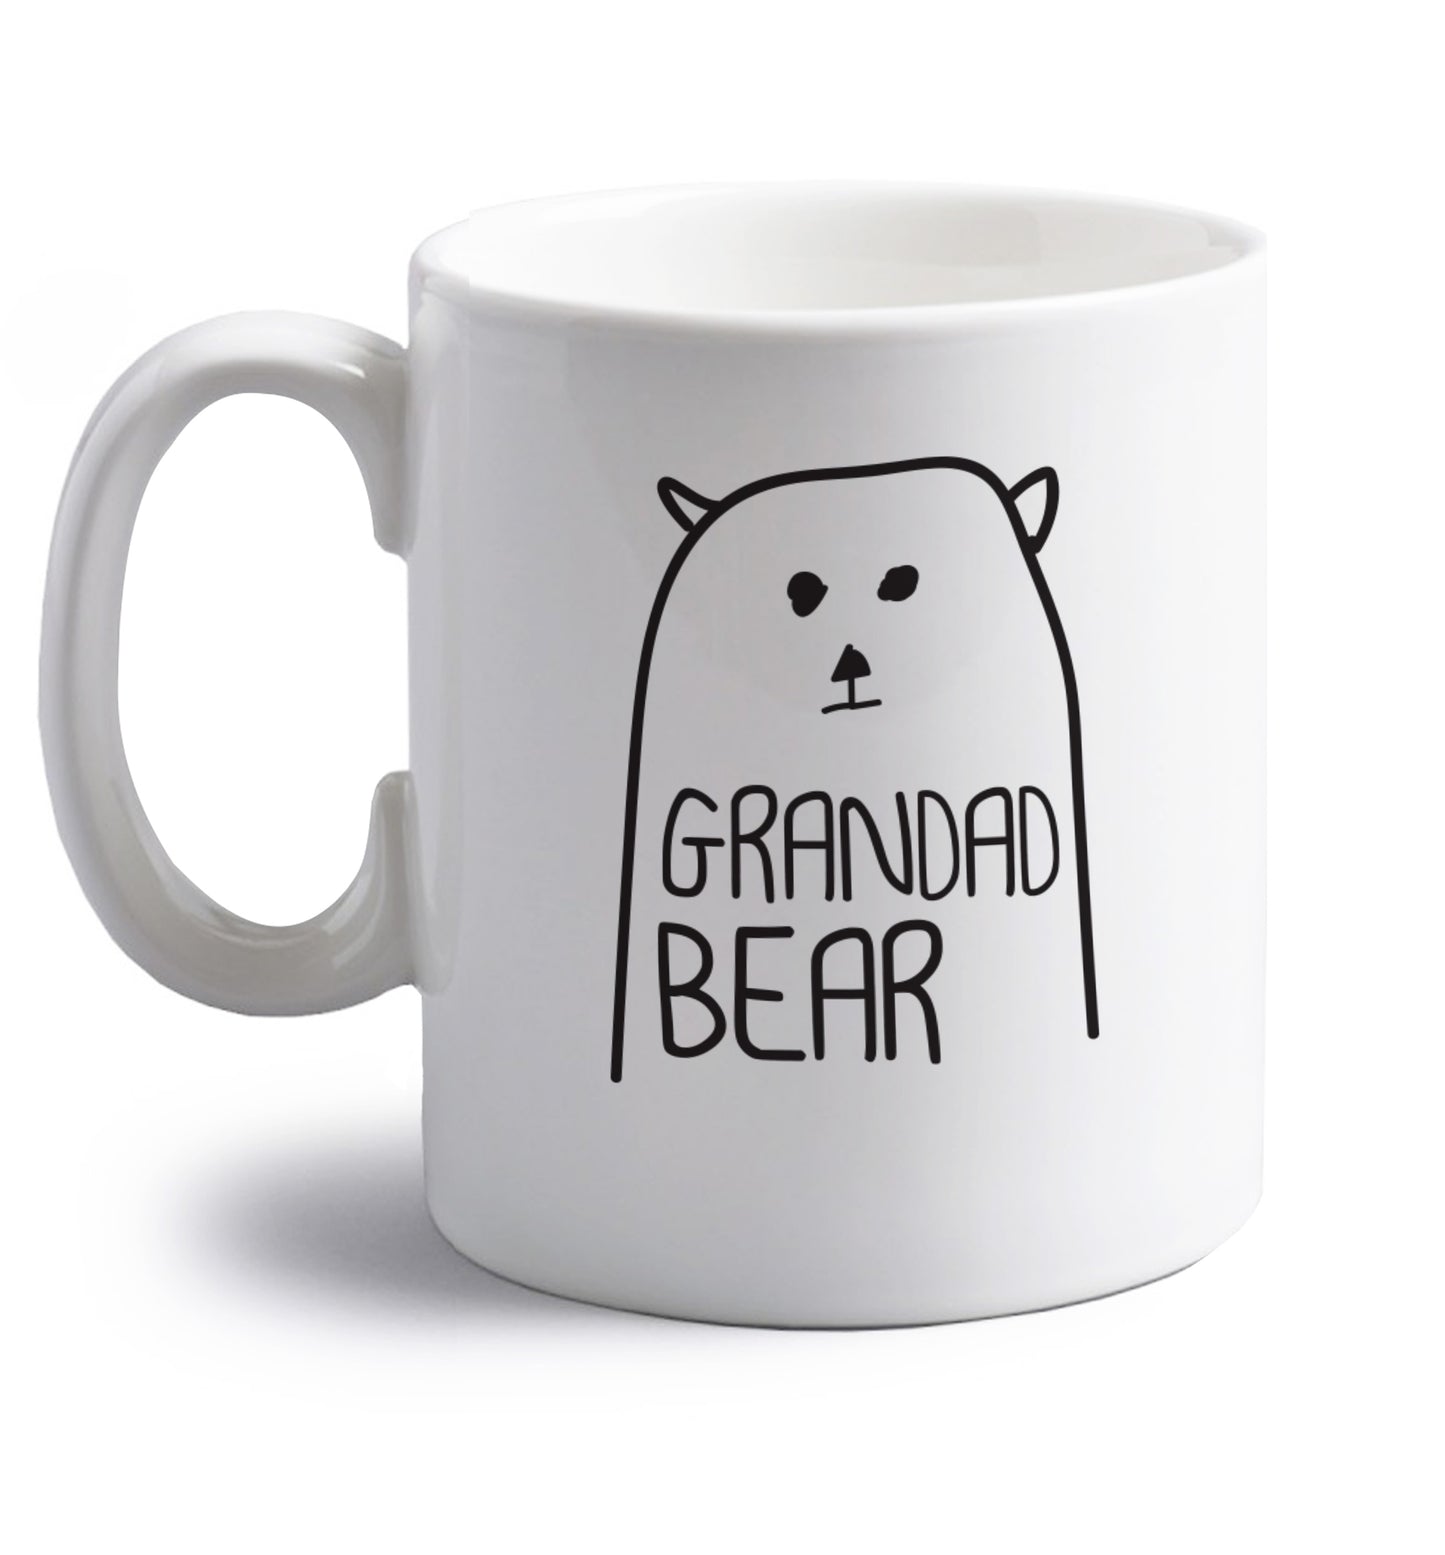 Grandad bear right handed white ceramic mug 